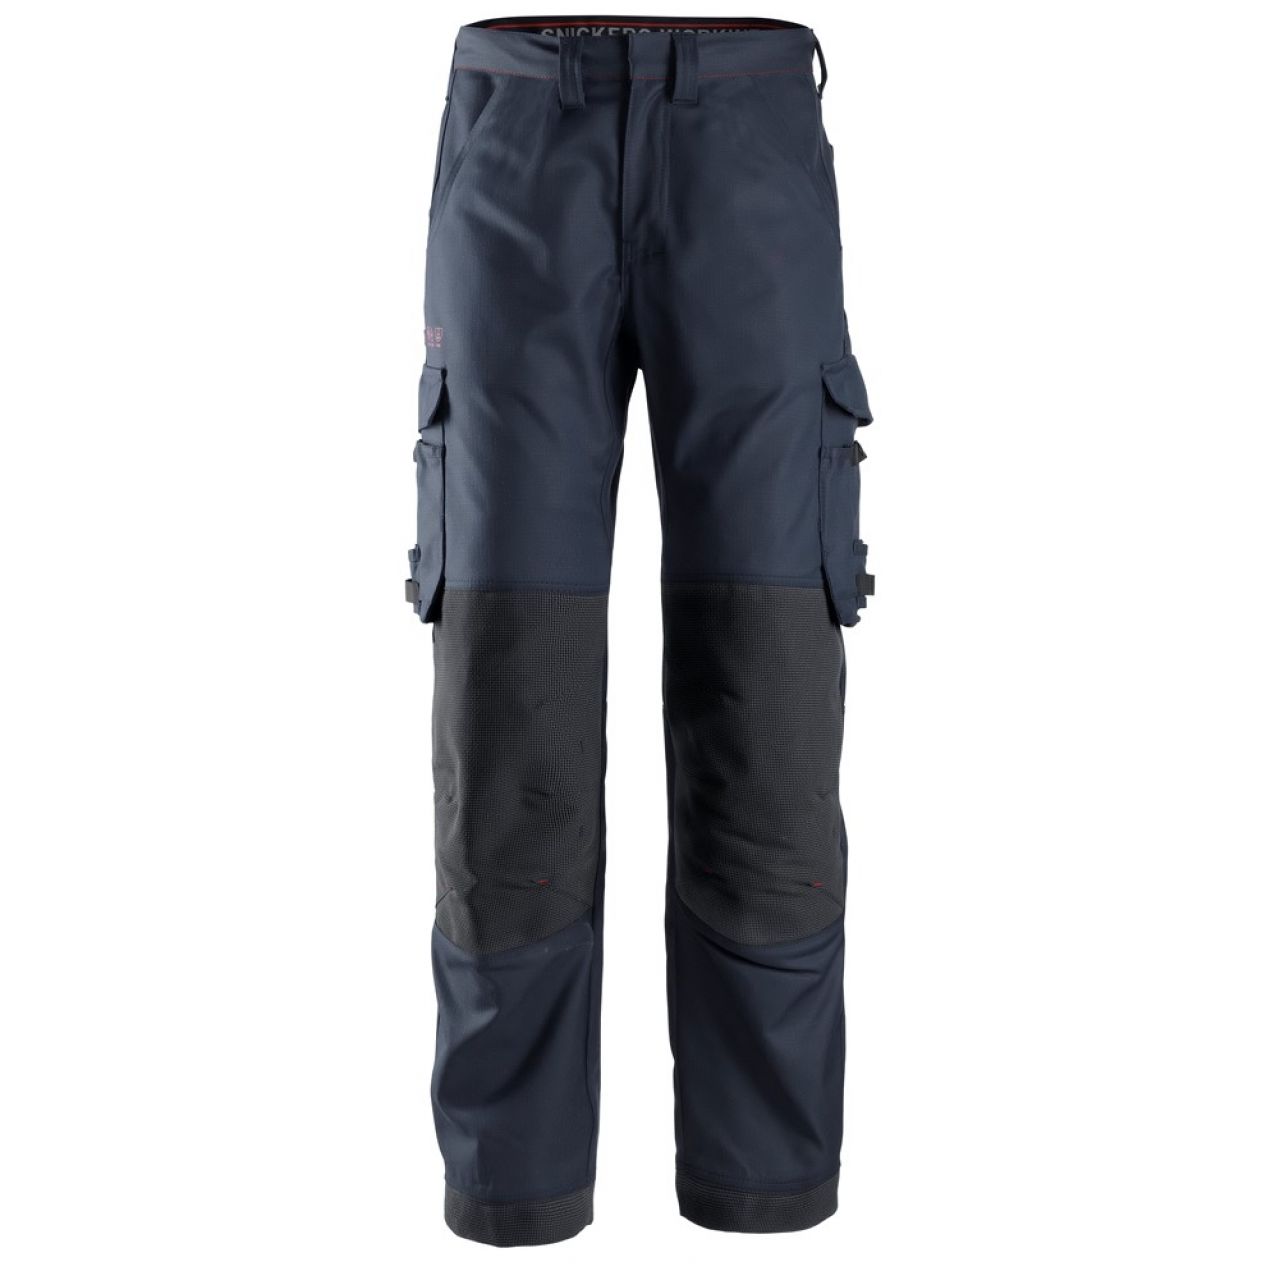 6362 Pantalones largos de trabajo con bolsillos simétricos ProtecWork azul marino talla 62